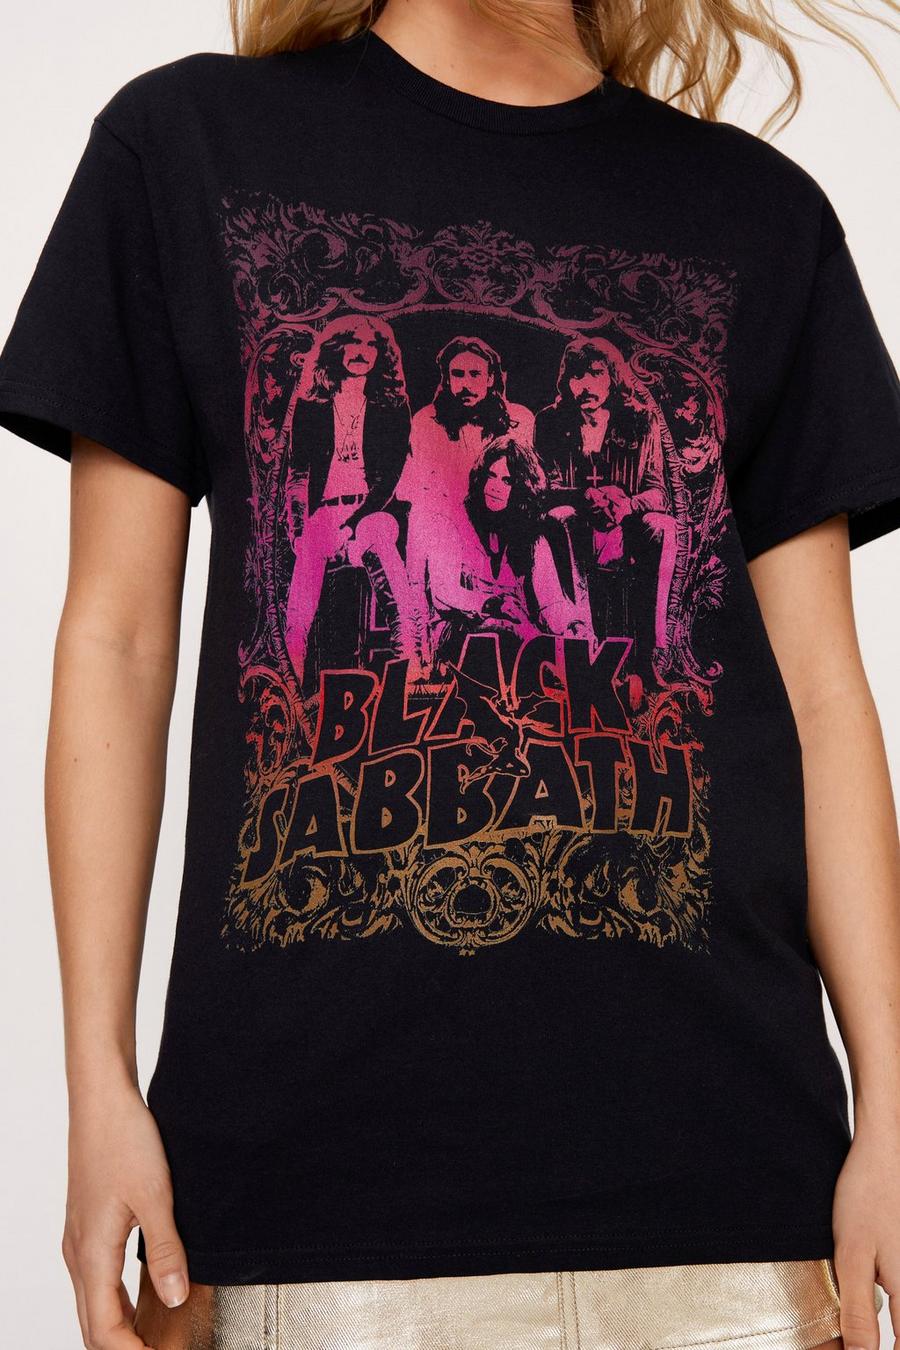 Black Sabbath Oversized Graphic Band T-shirt